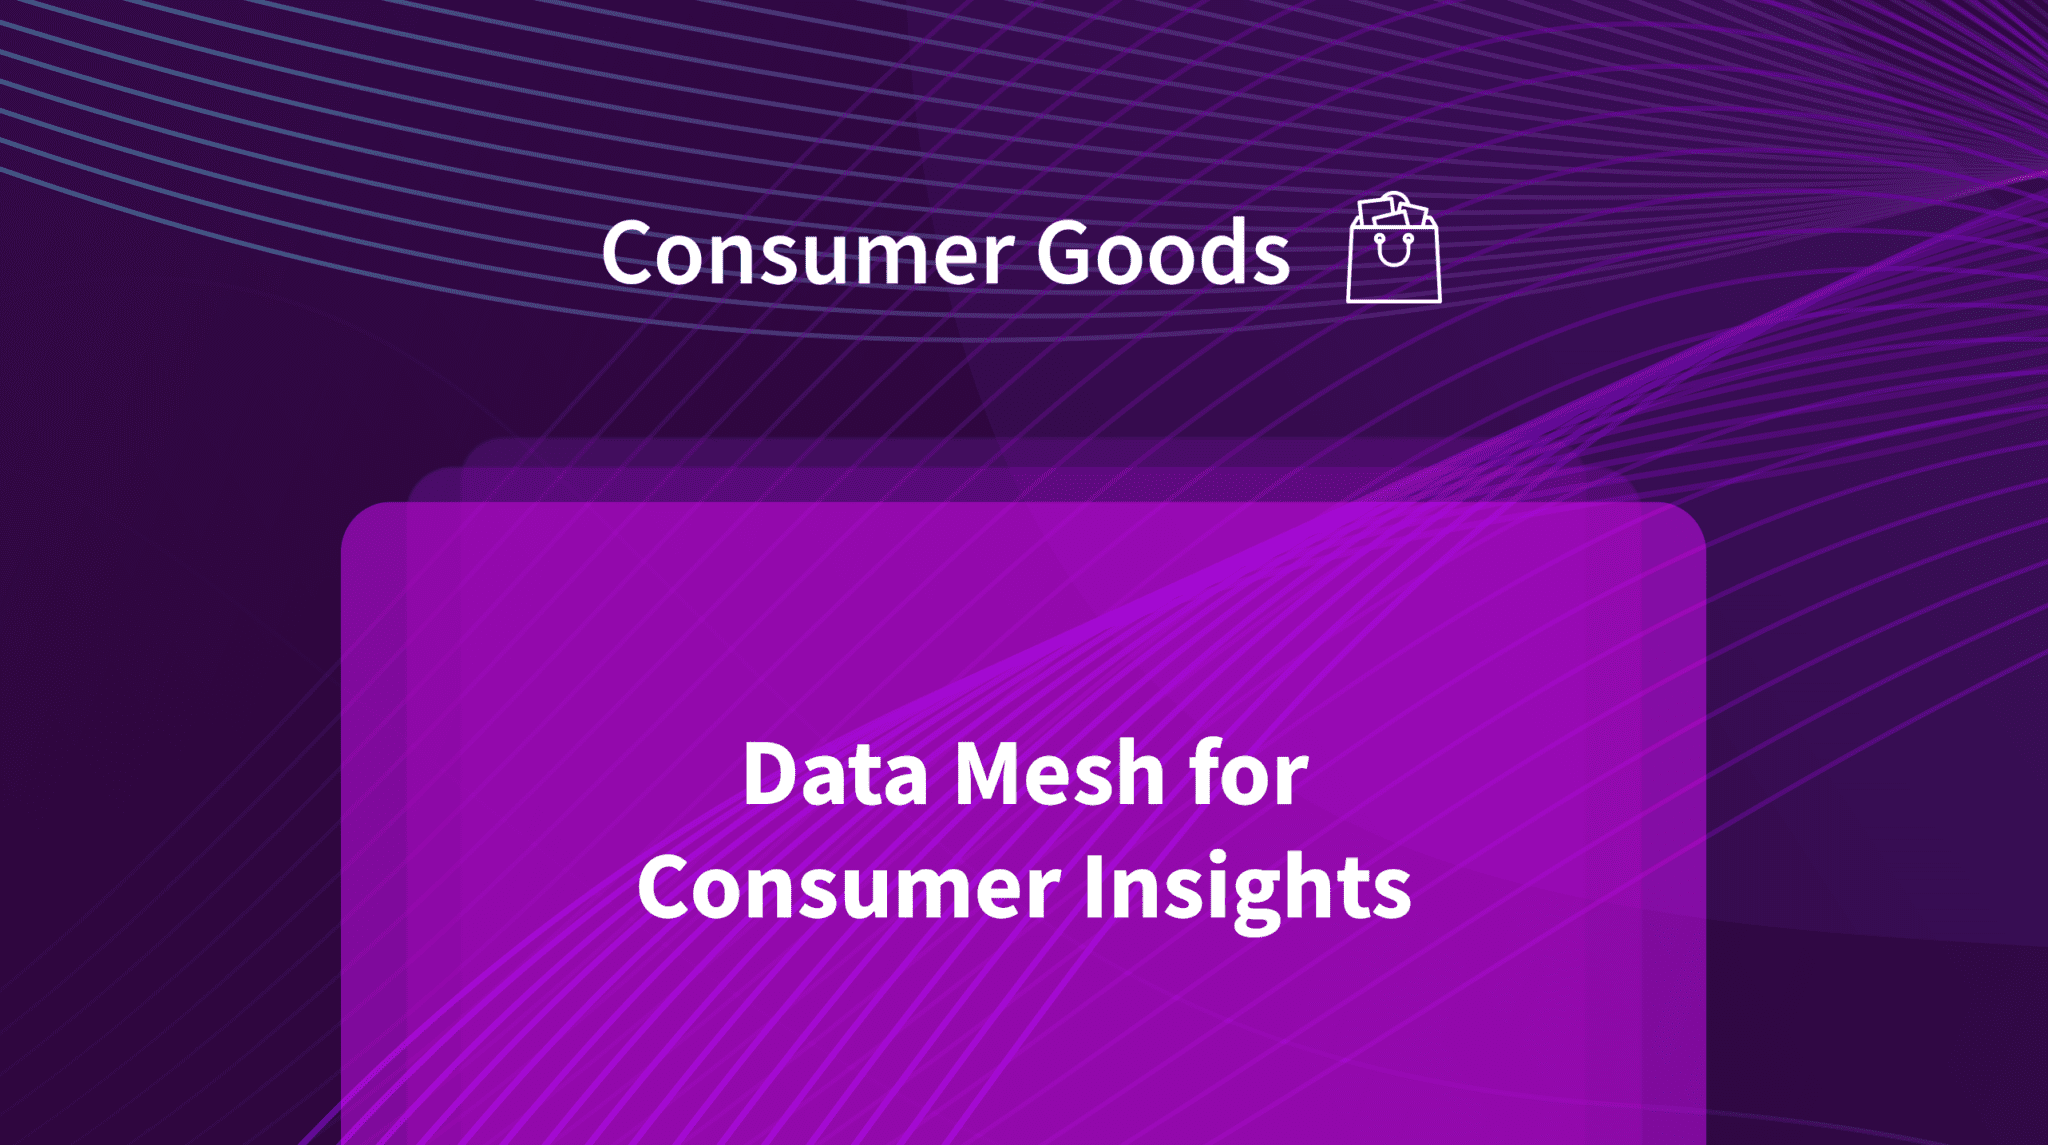 Consumer goods - Data Mesh for Consumer Insights